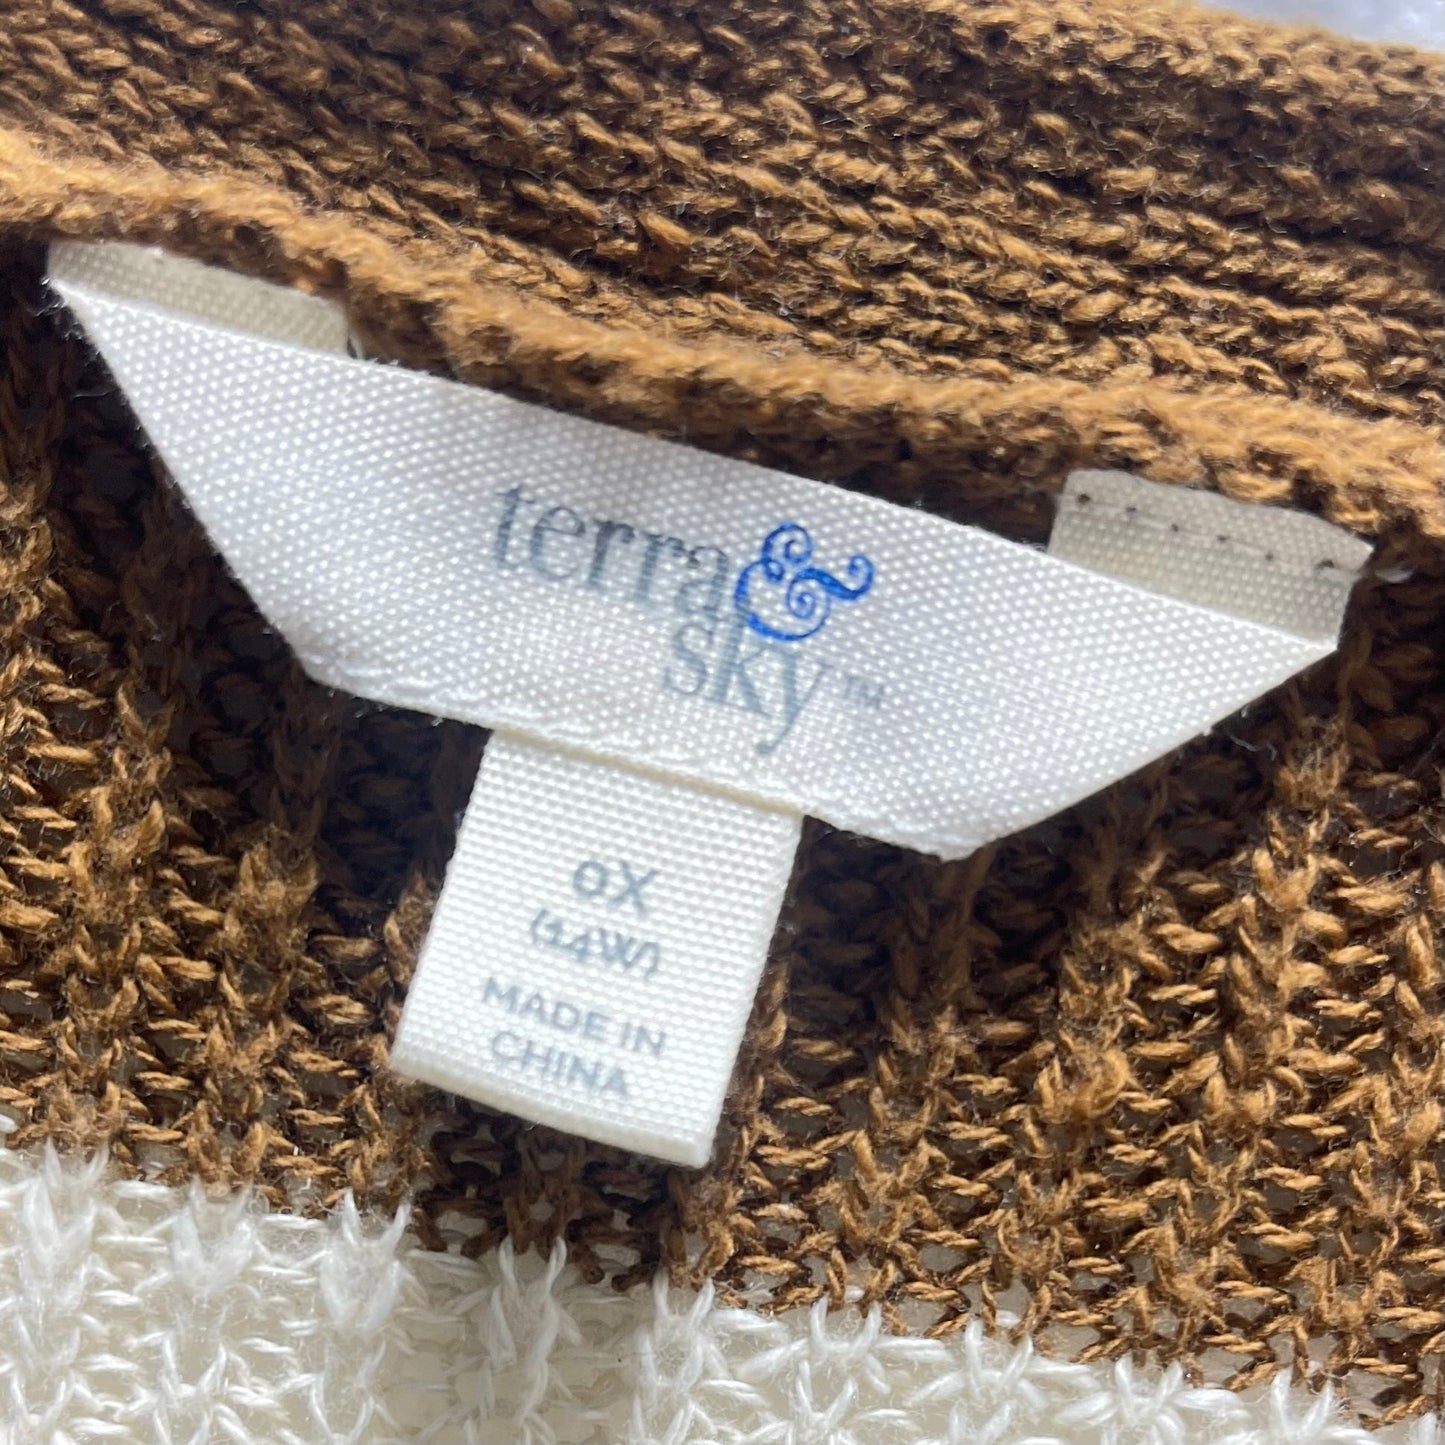 Sweater By Terra & Sky  Size: 1x